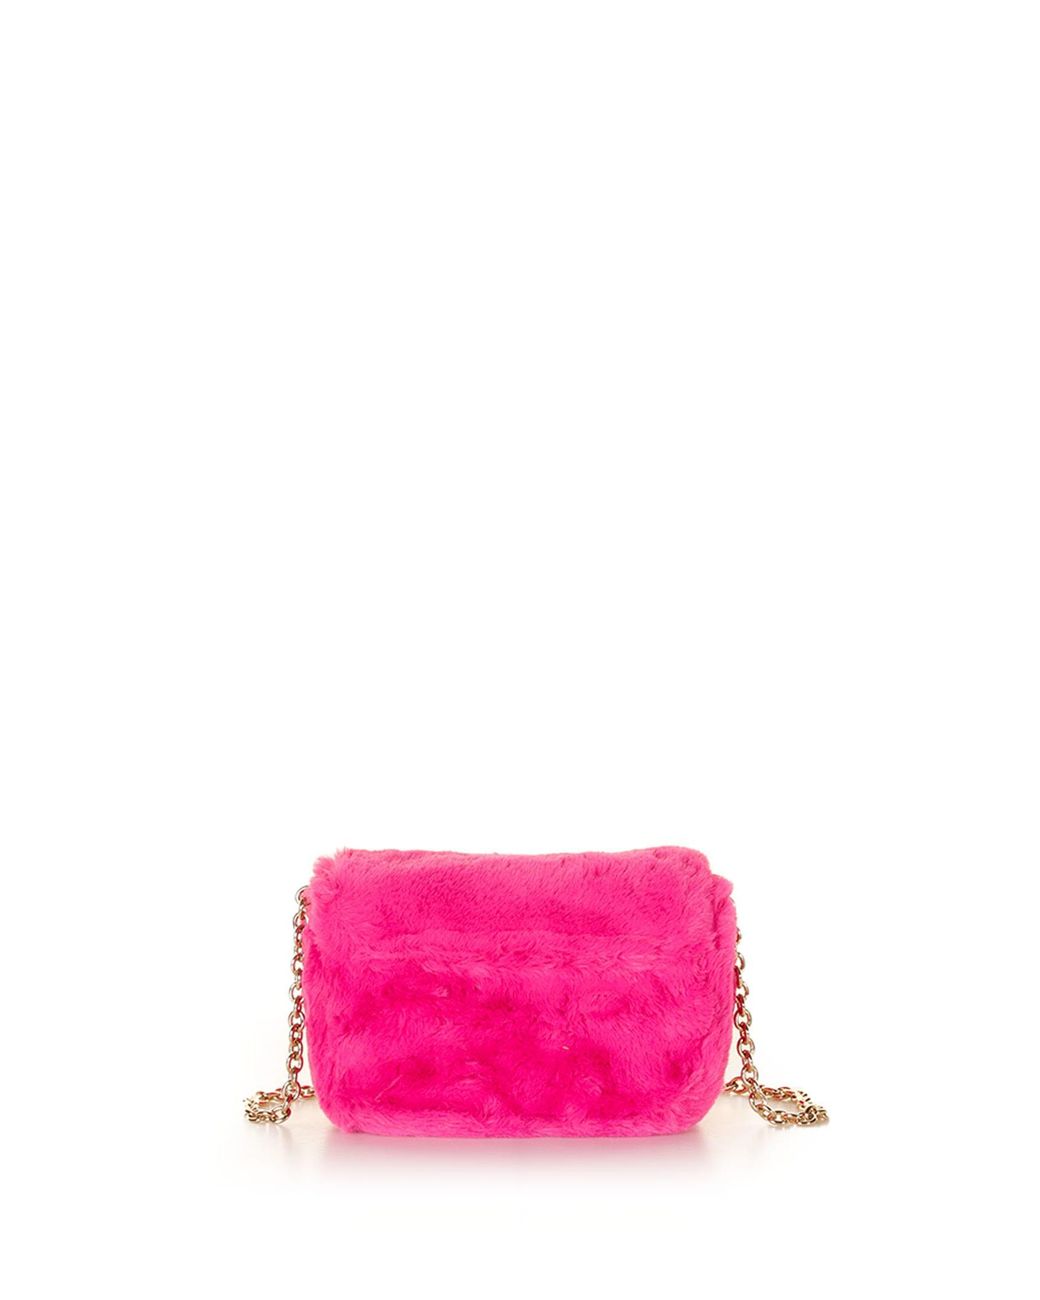 Furla Metropolis Mini Teddy Shoulder Bag in Pink